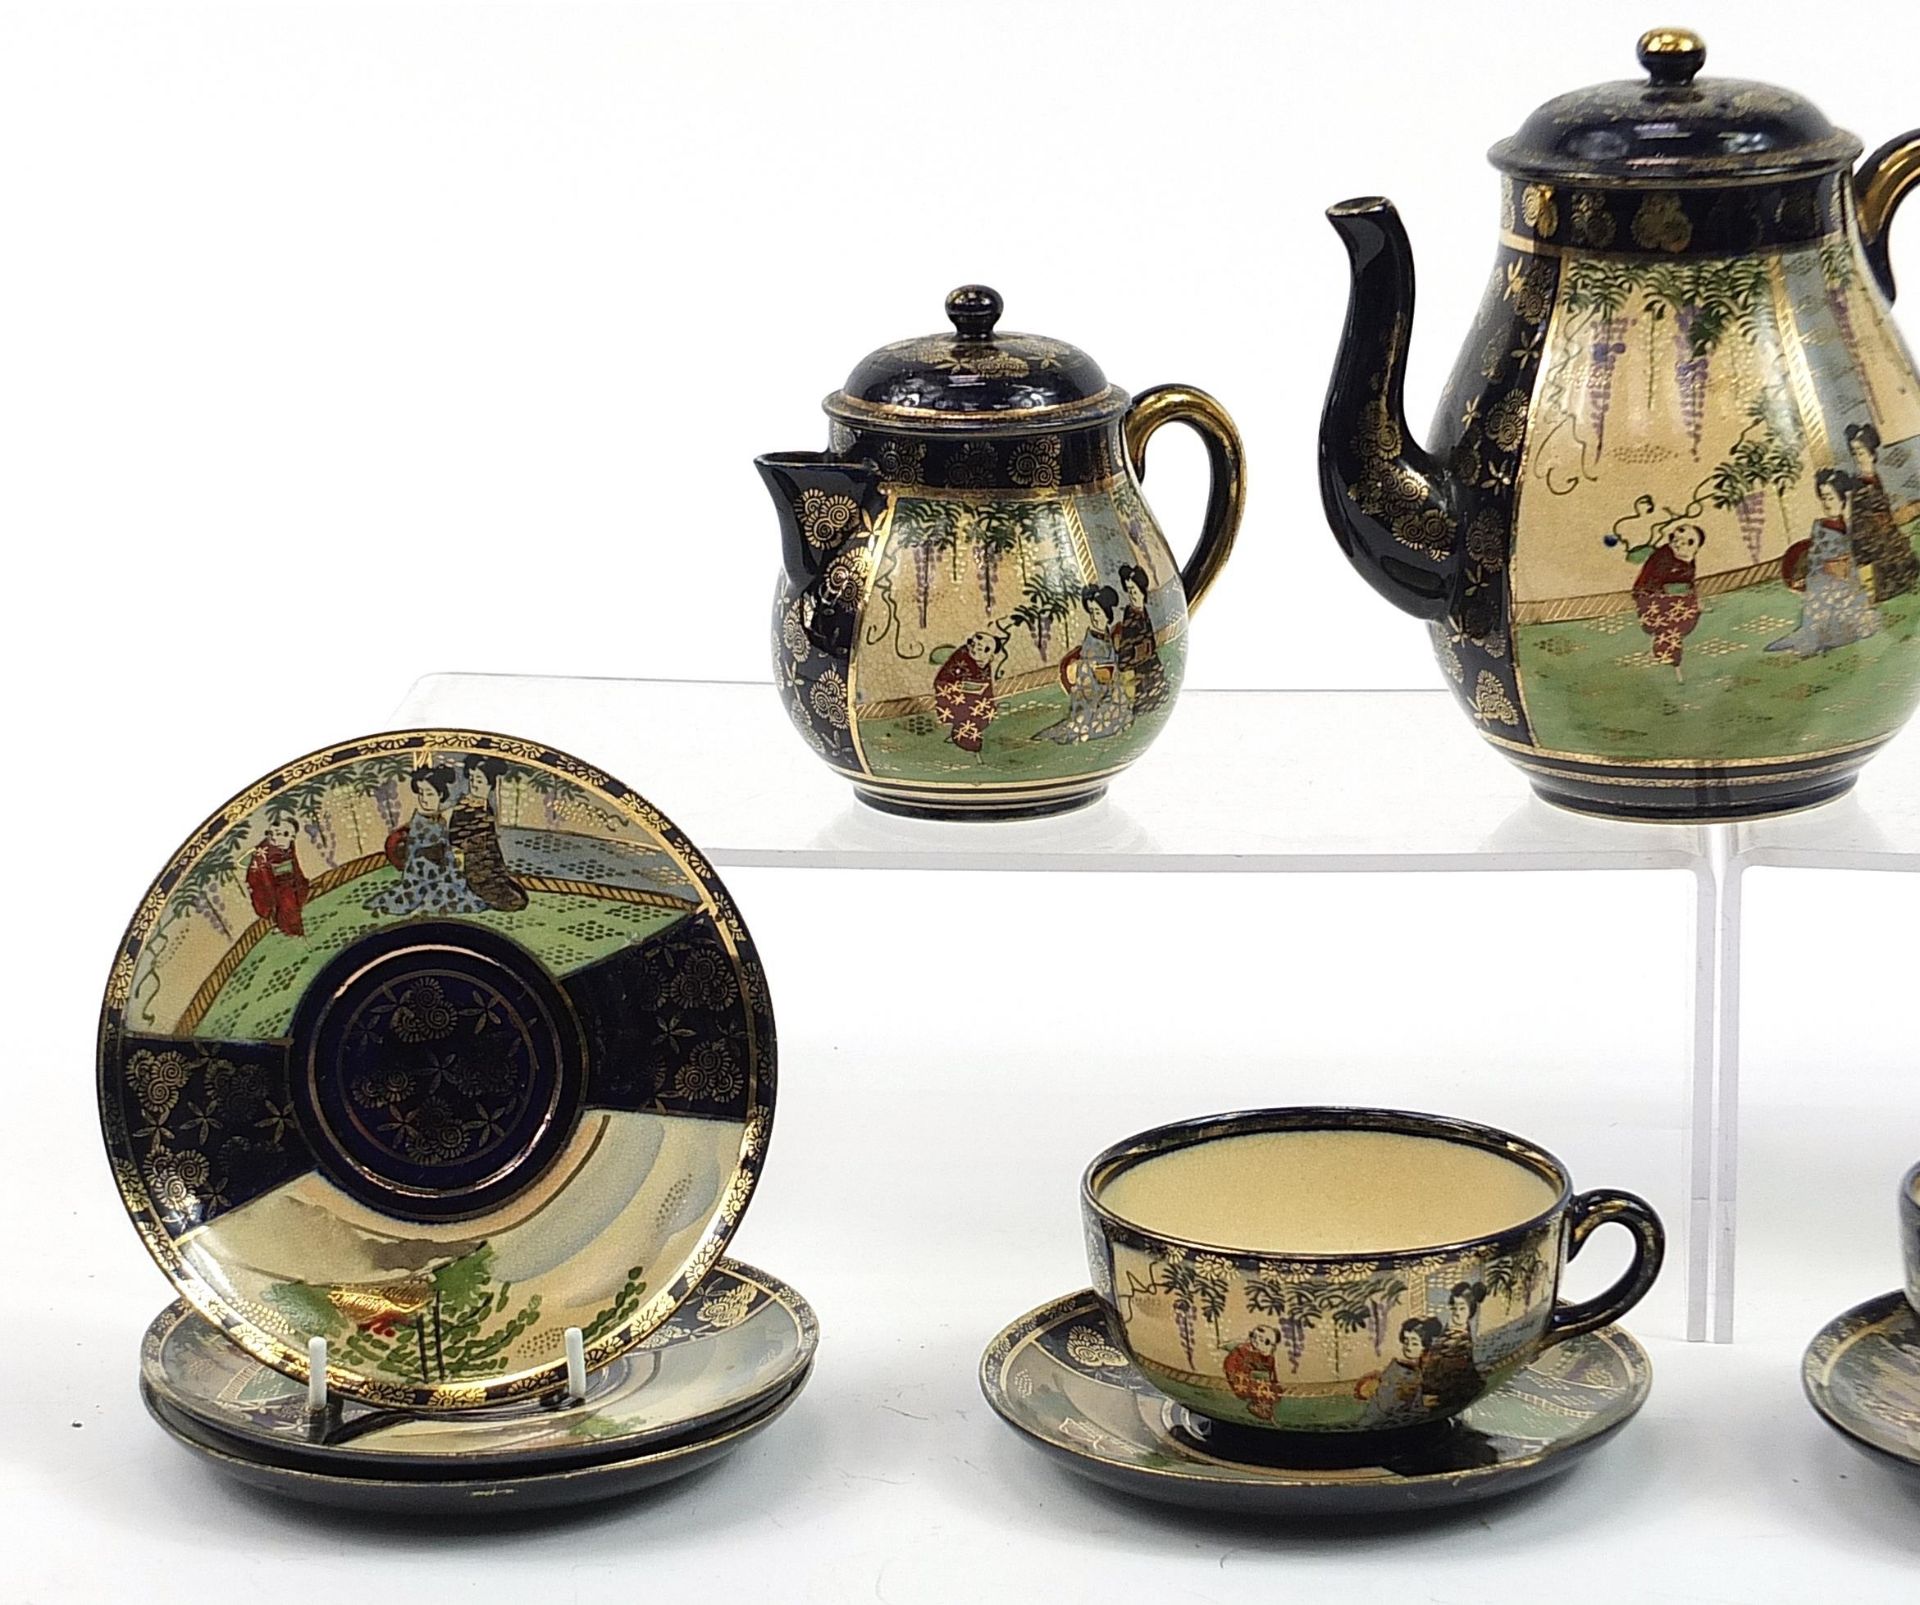 Japanese Satsuma part tea service including teapot, sugar bowl and milk jug, the teapot 16cm high - Image 2 of 4